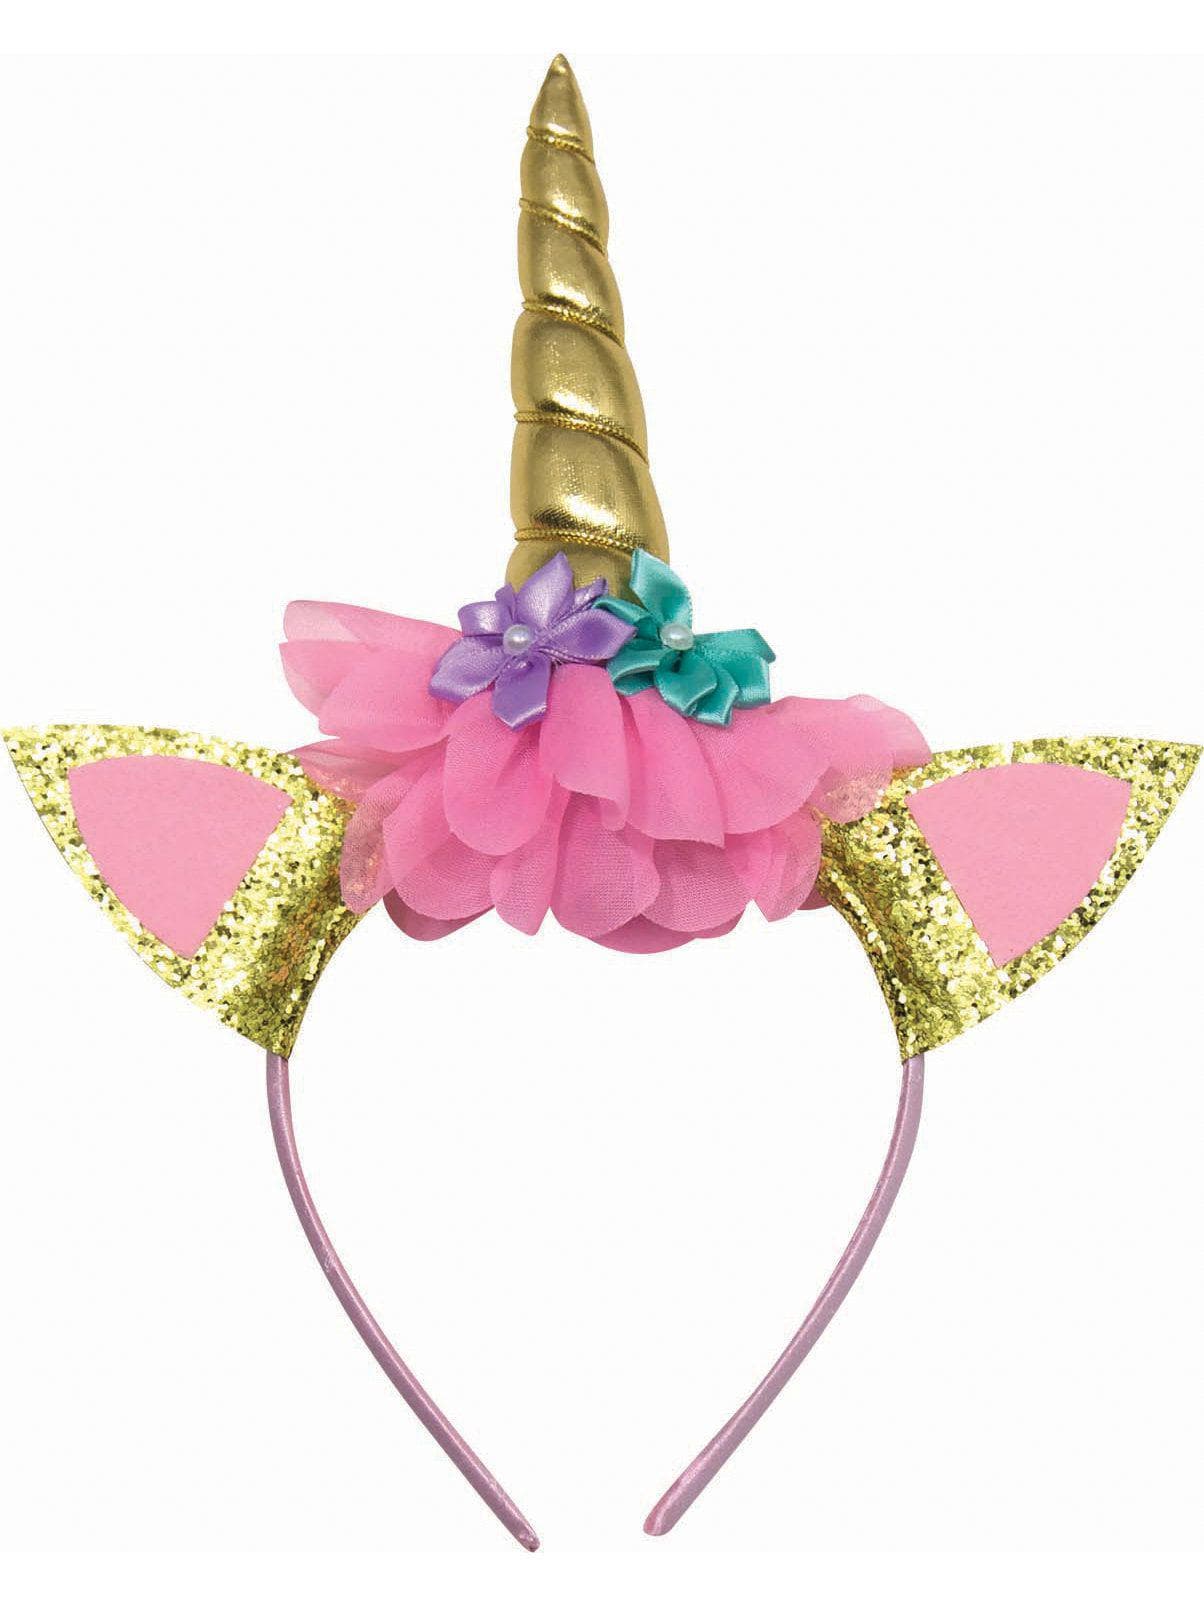 Unicorn Headband Accessory - costumes.com